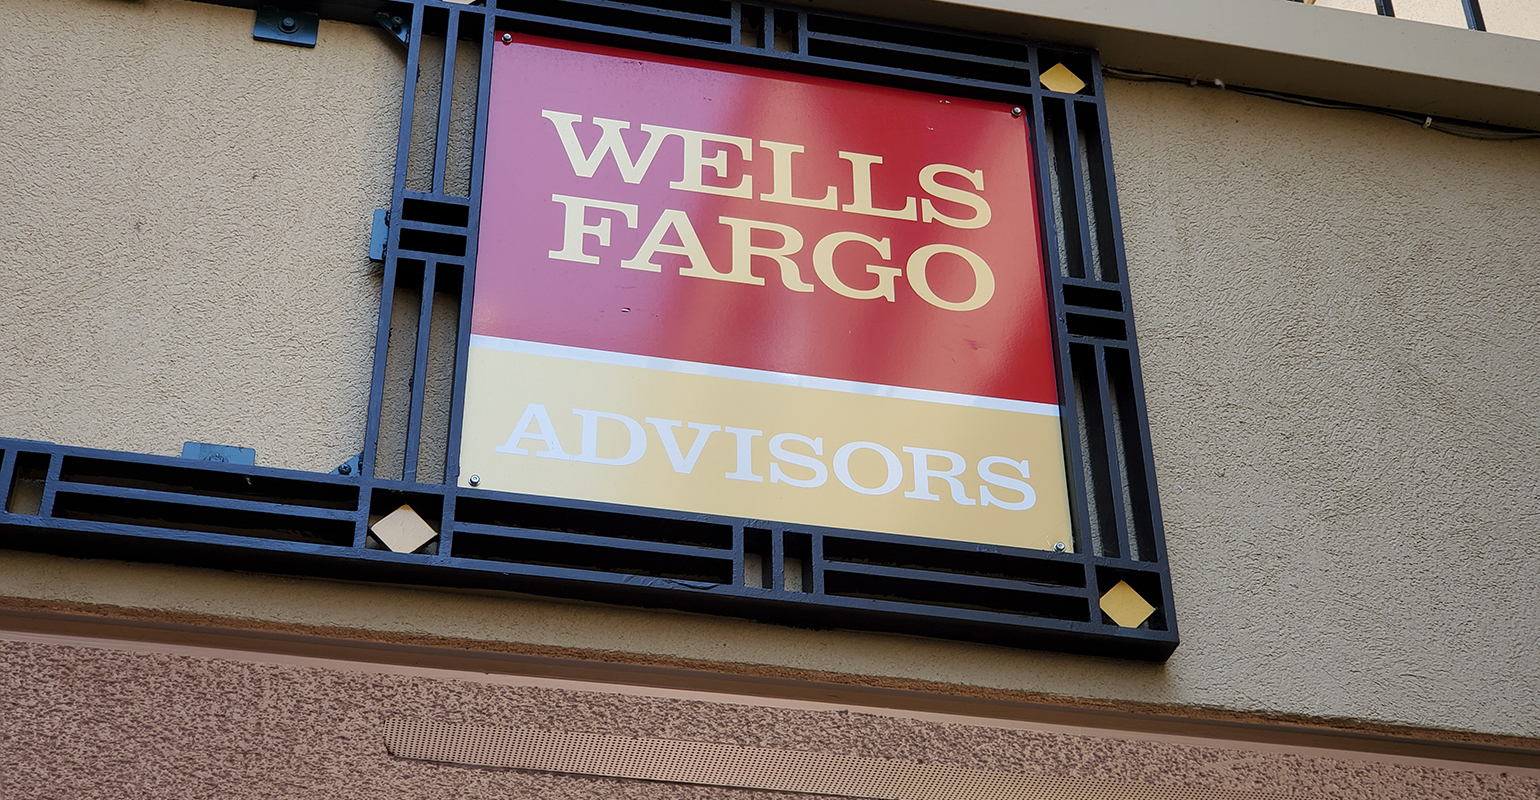 wells fargo advisors sign new Smith%20Collection Gado